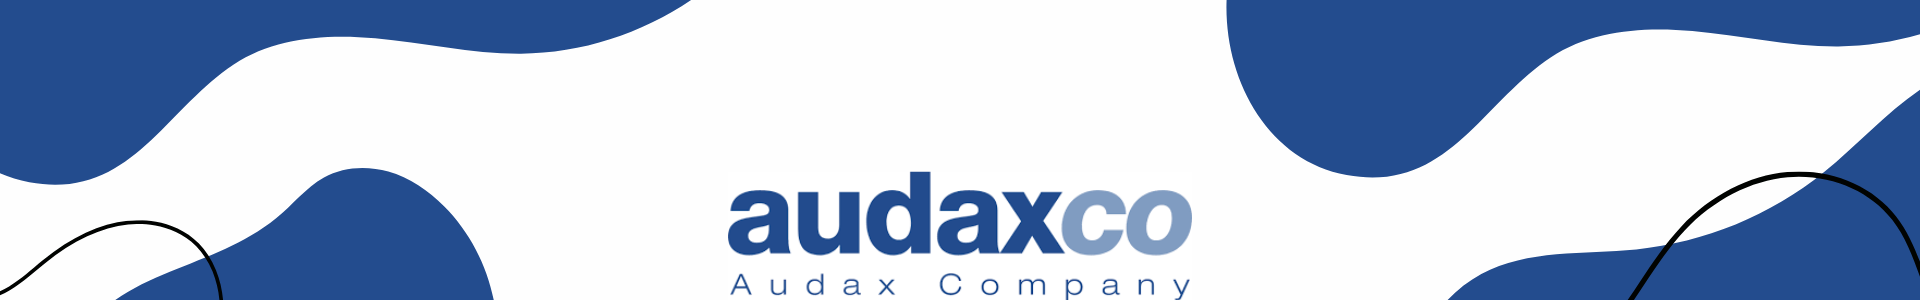 Marca Audax Co